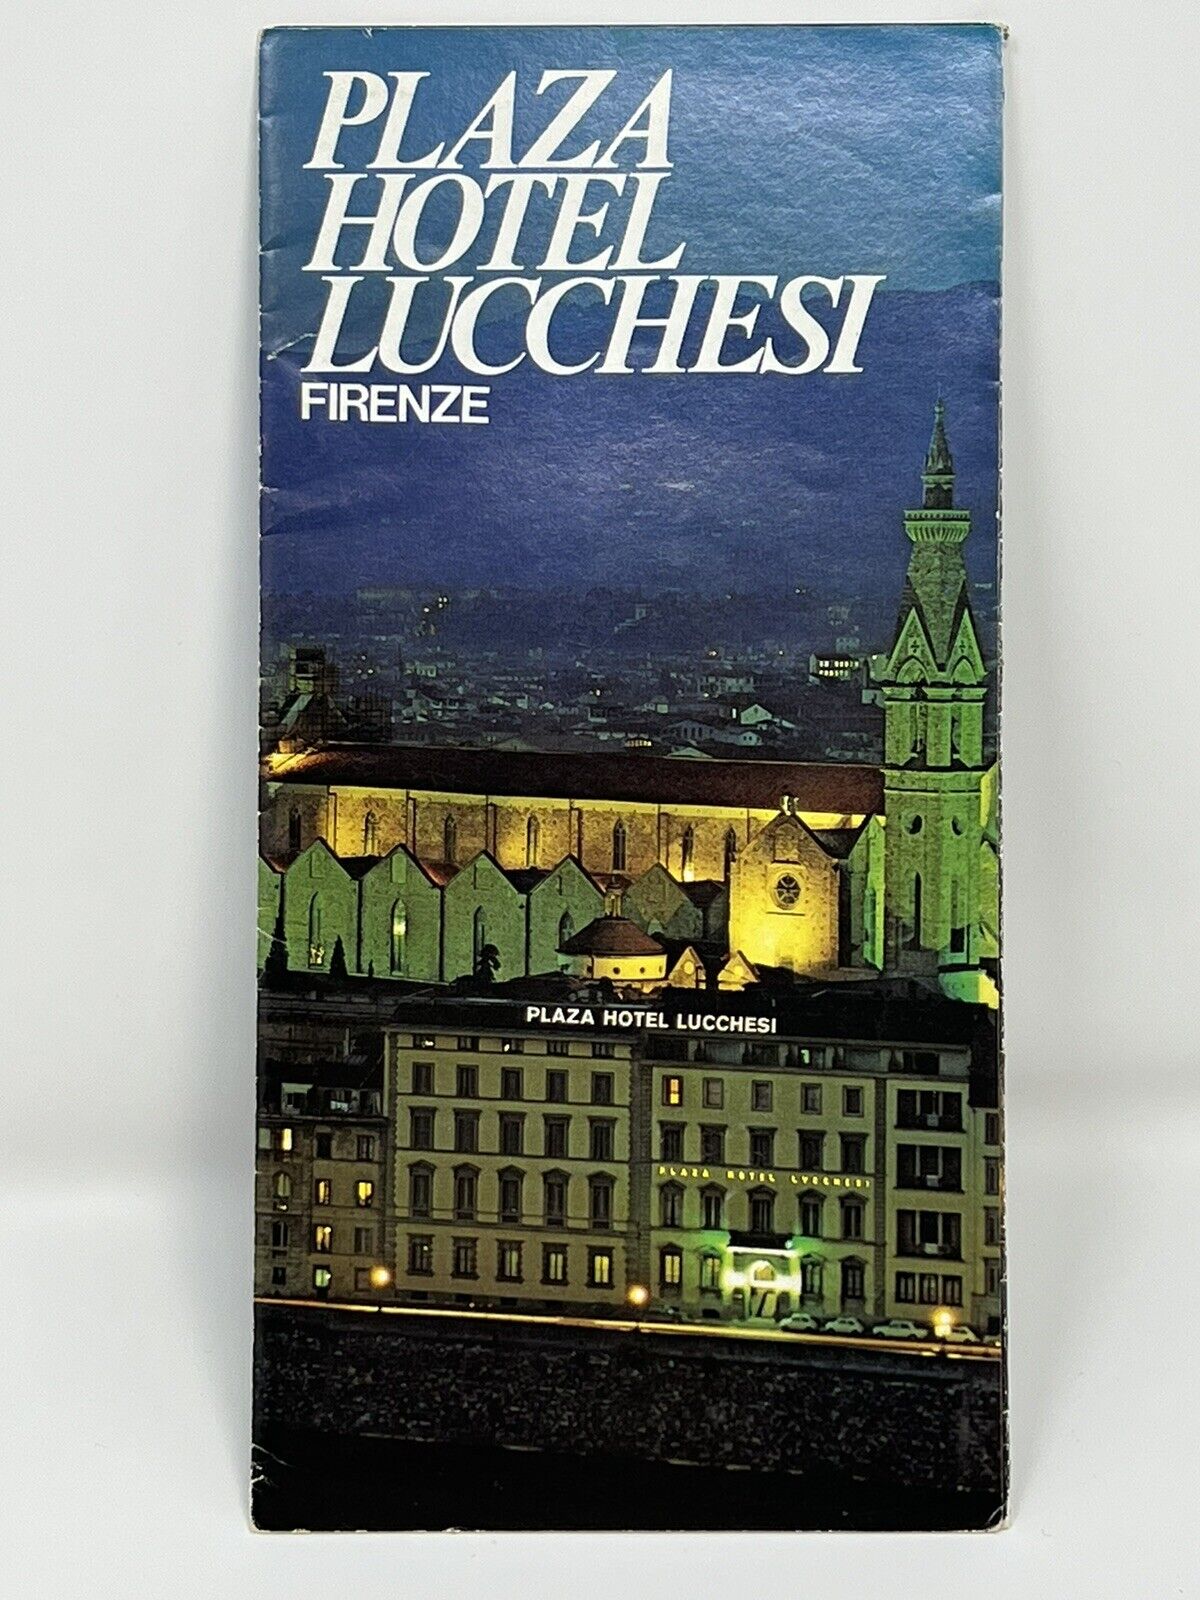 Original Vintage Italian Plaza Hotel Lucchesi Brochure Firenze Florence, Italy